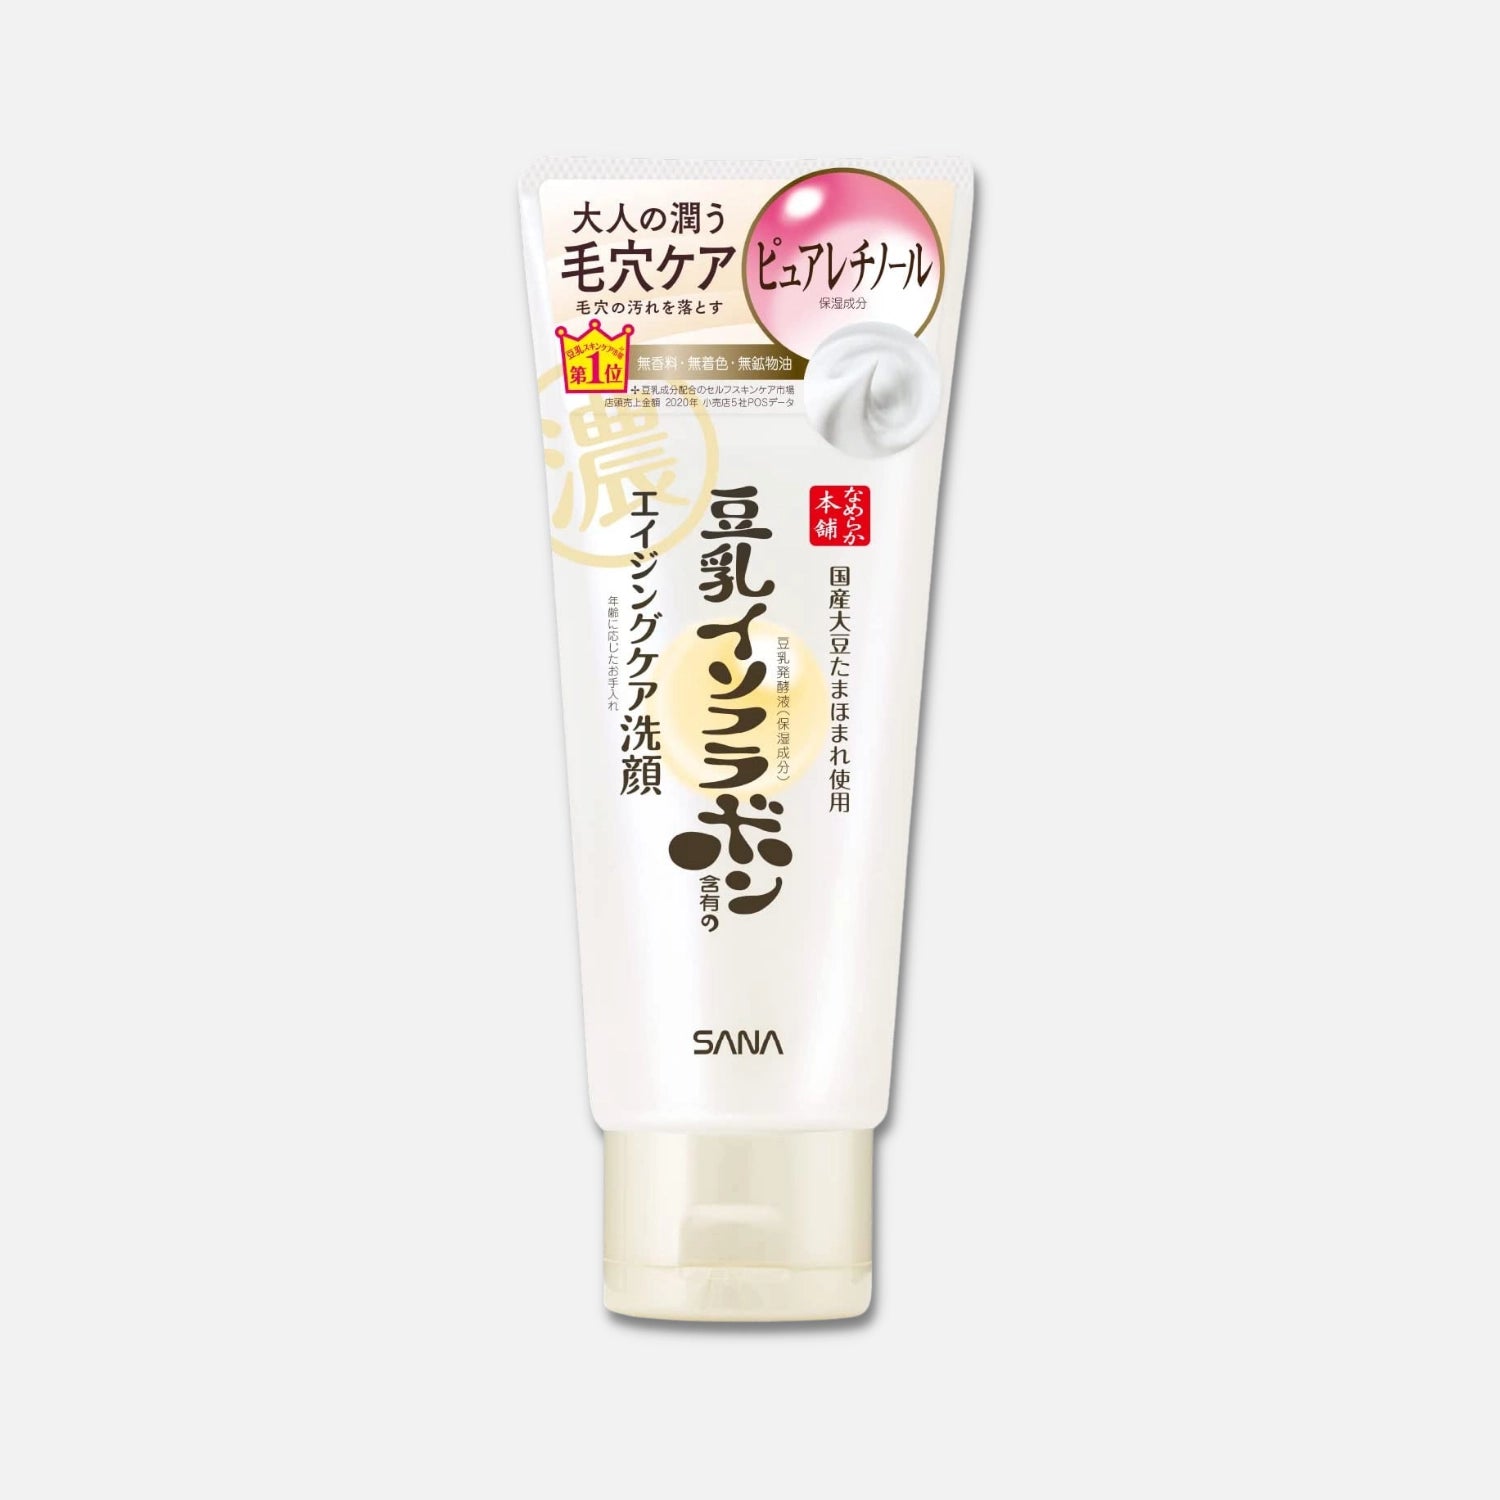 Sana Soy Isoflavones Retinol Face Cleanser 150g - Buy Me Japan